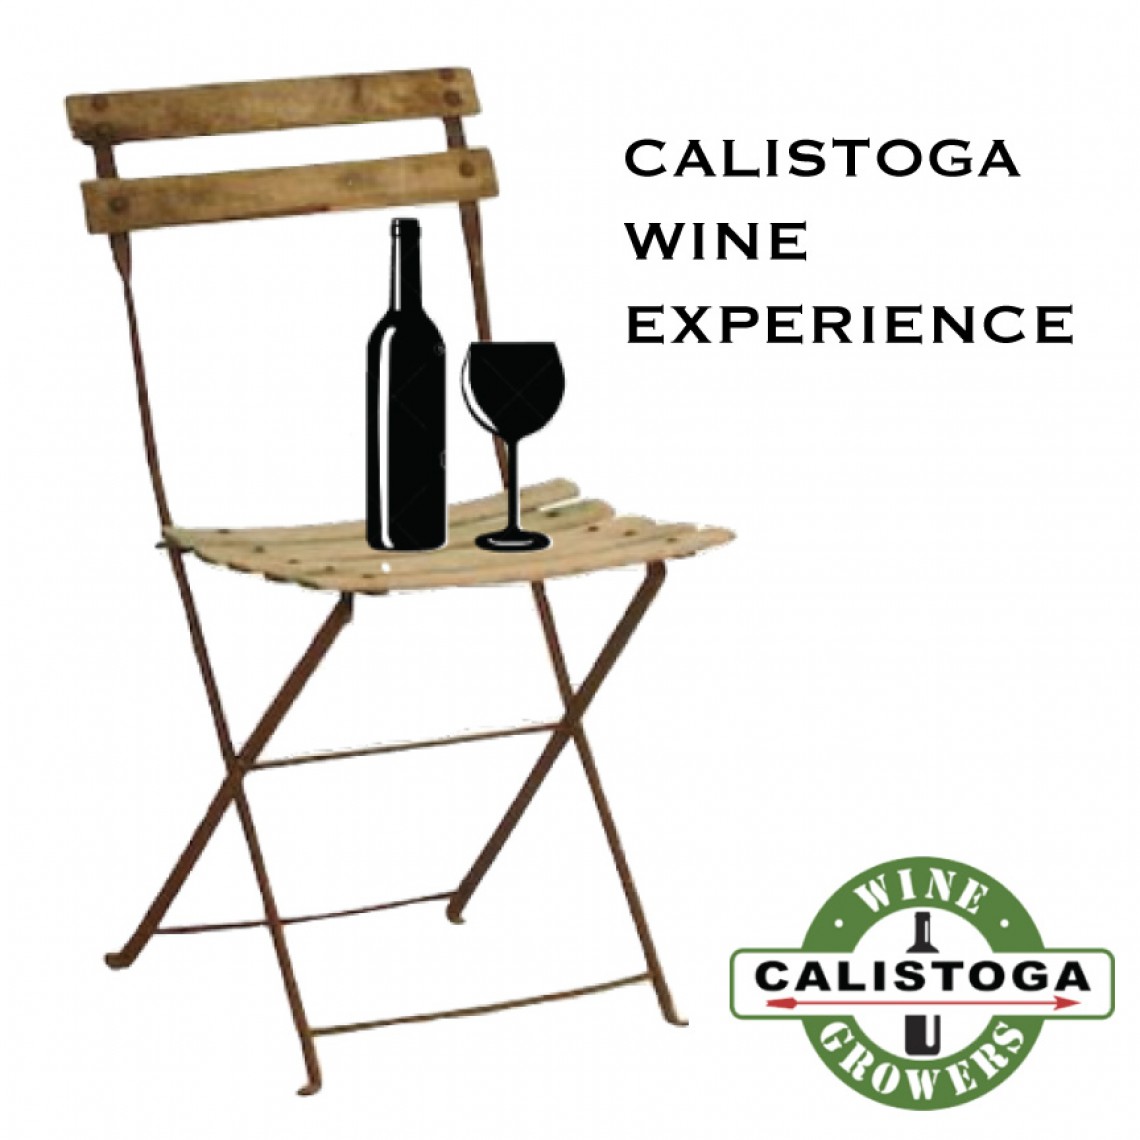 The CALISTOGA WINE EXPERIENCE